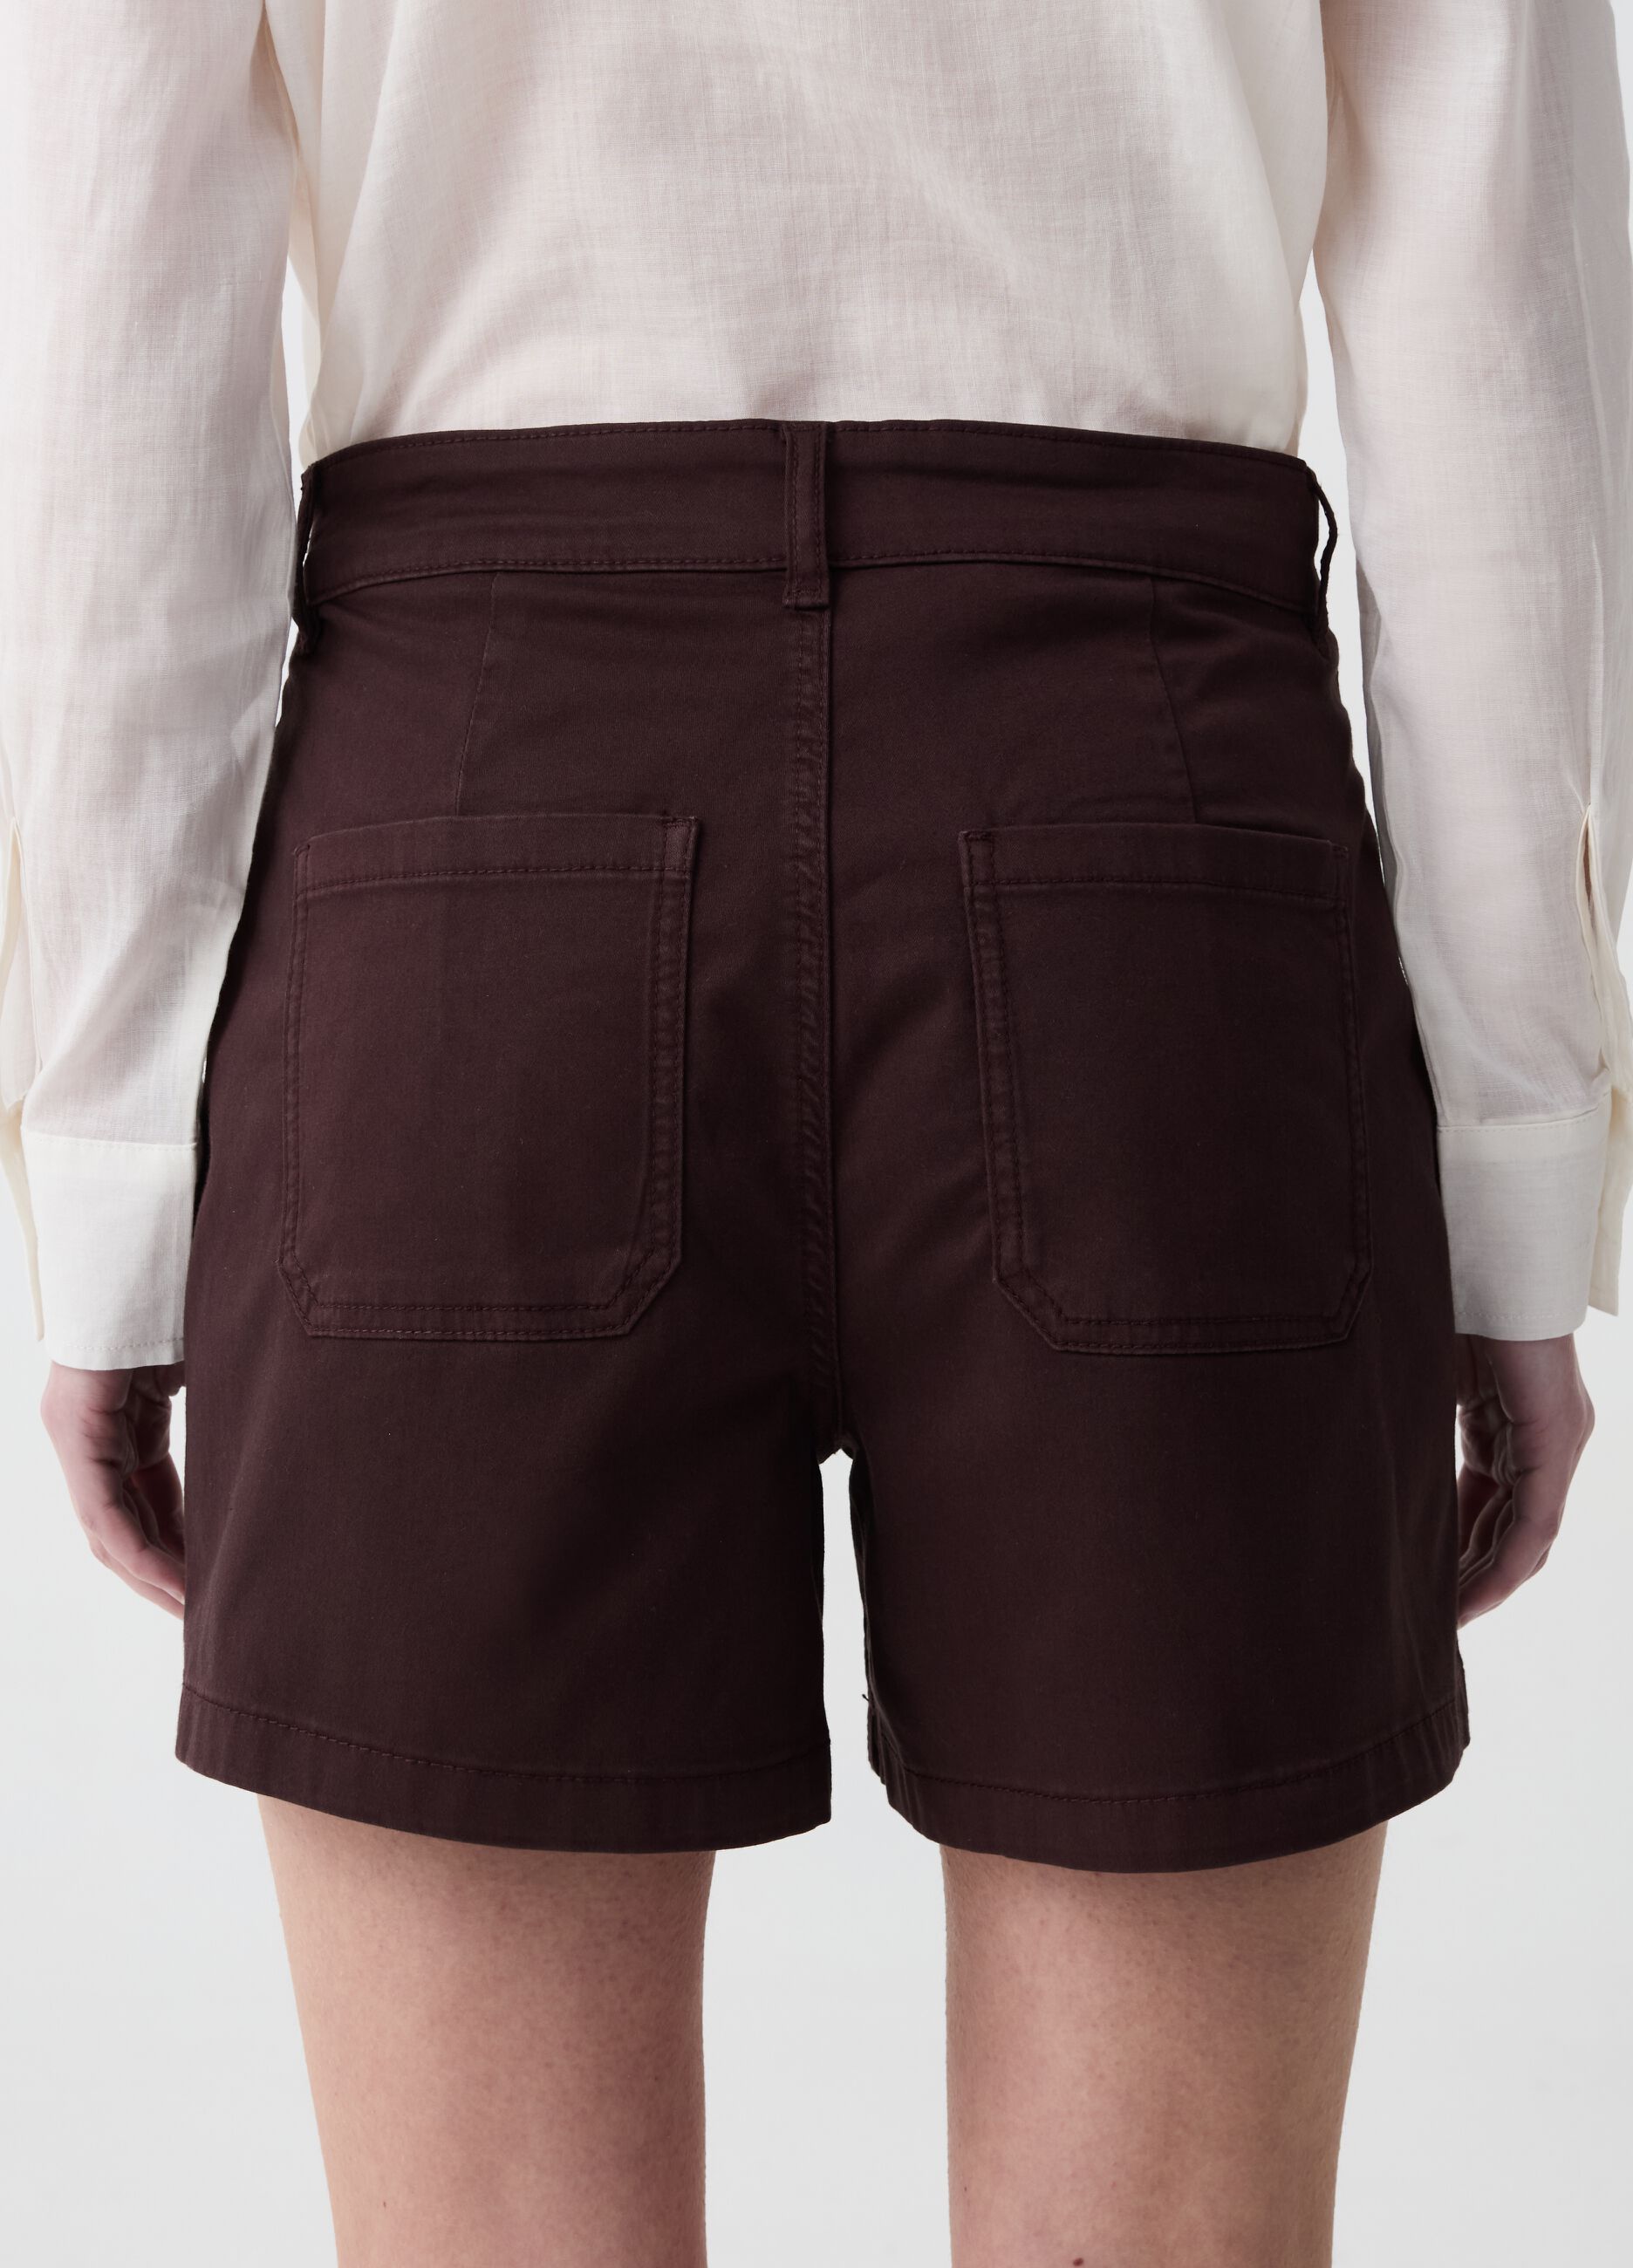 Shorts de algodón elástico con bolsillos